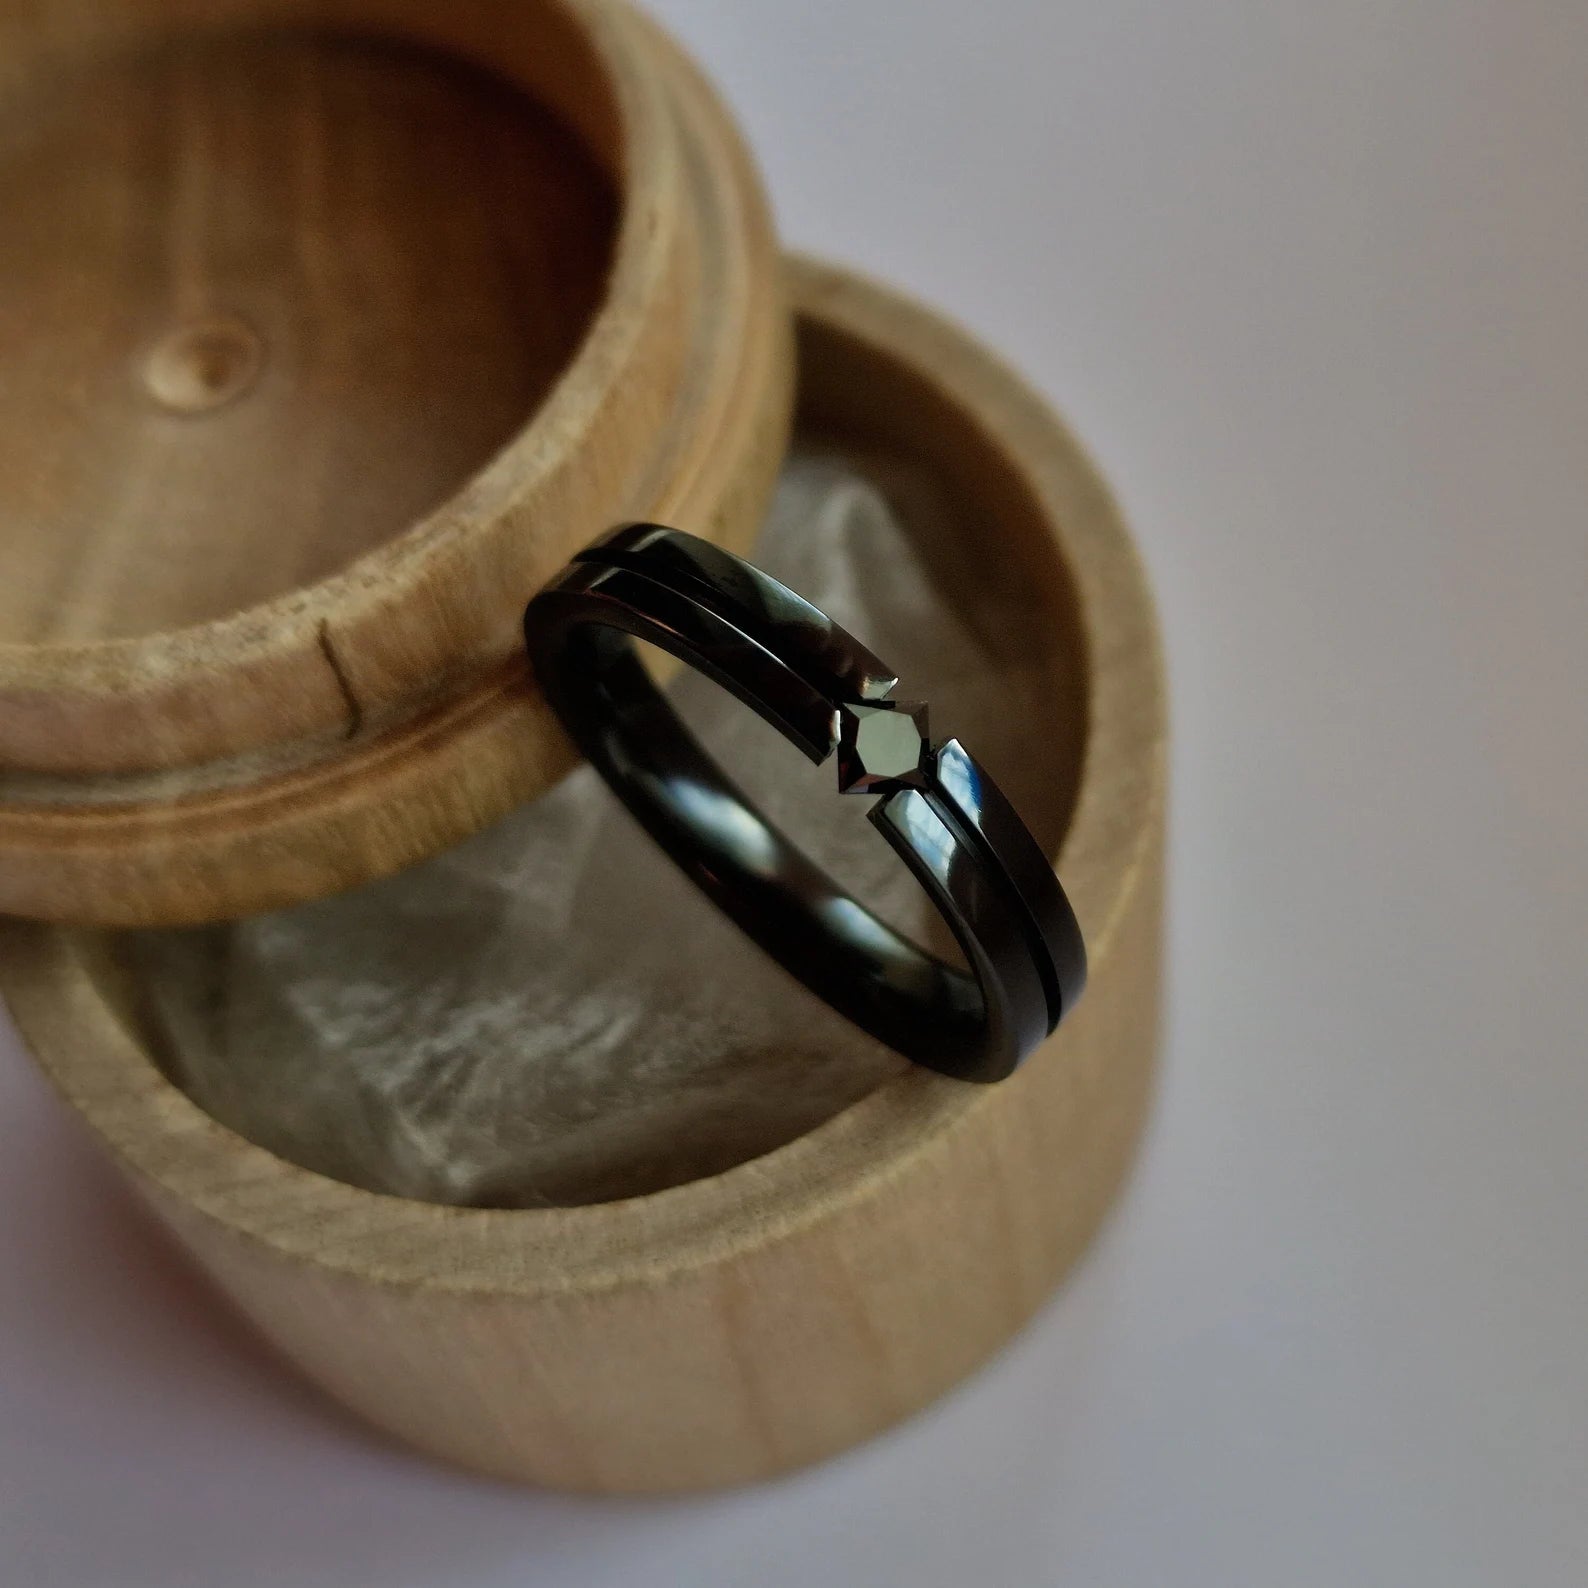 Handmade Polished Black Zirconium Tension Ring with Princess Cut